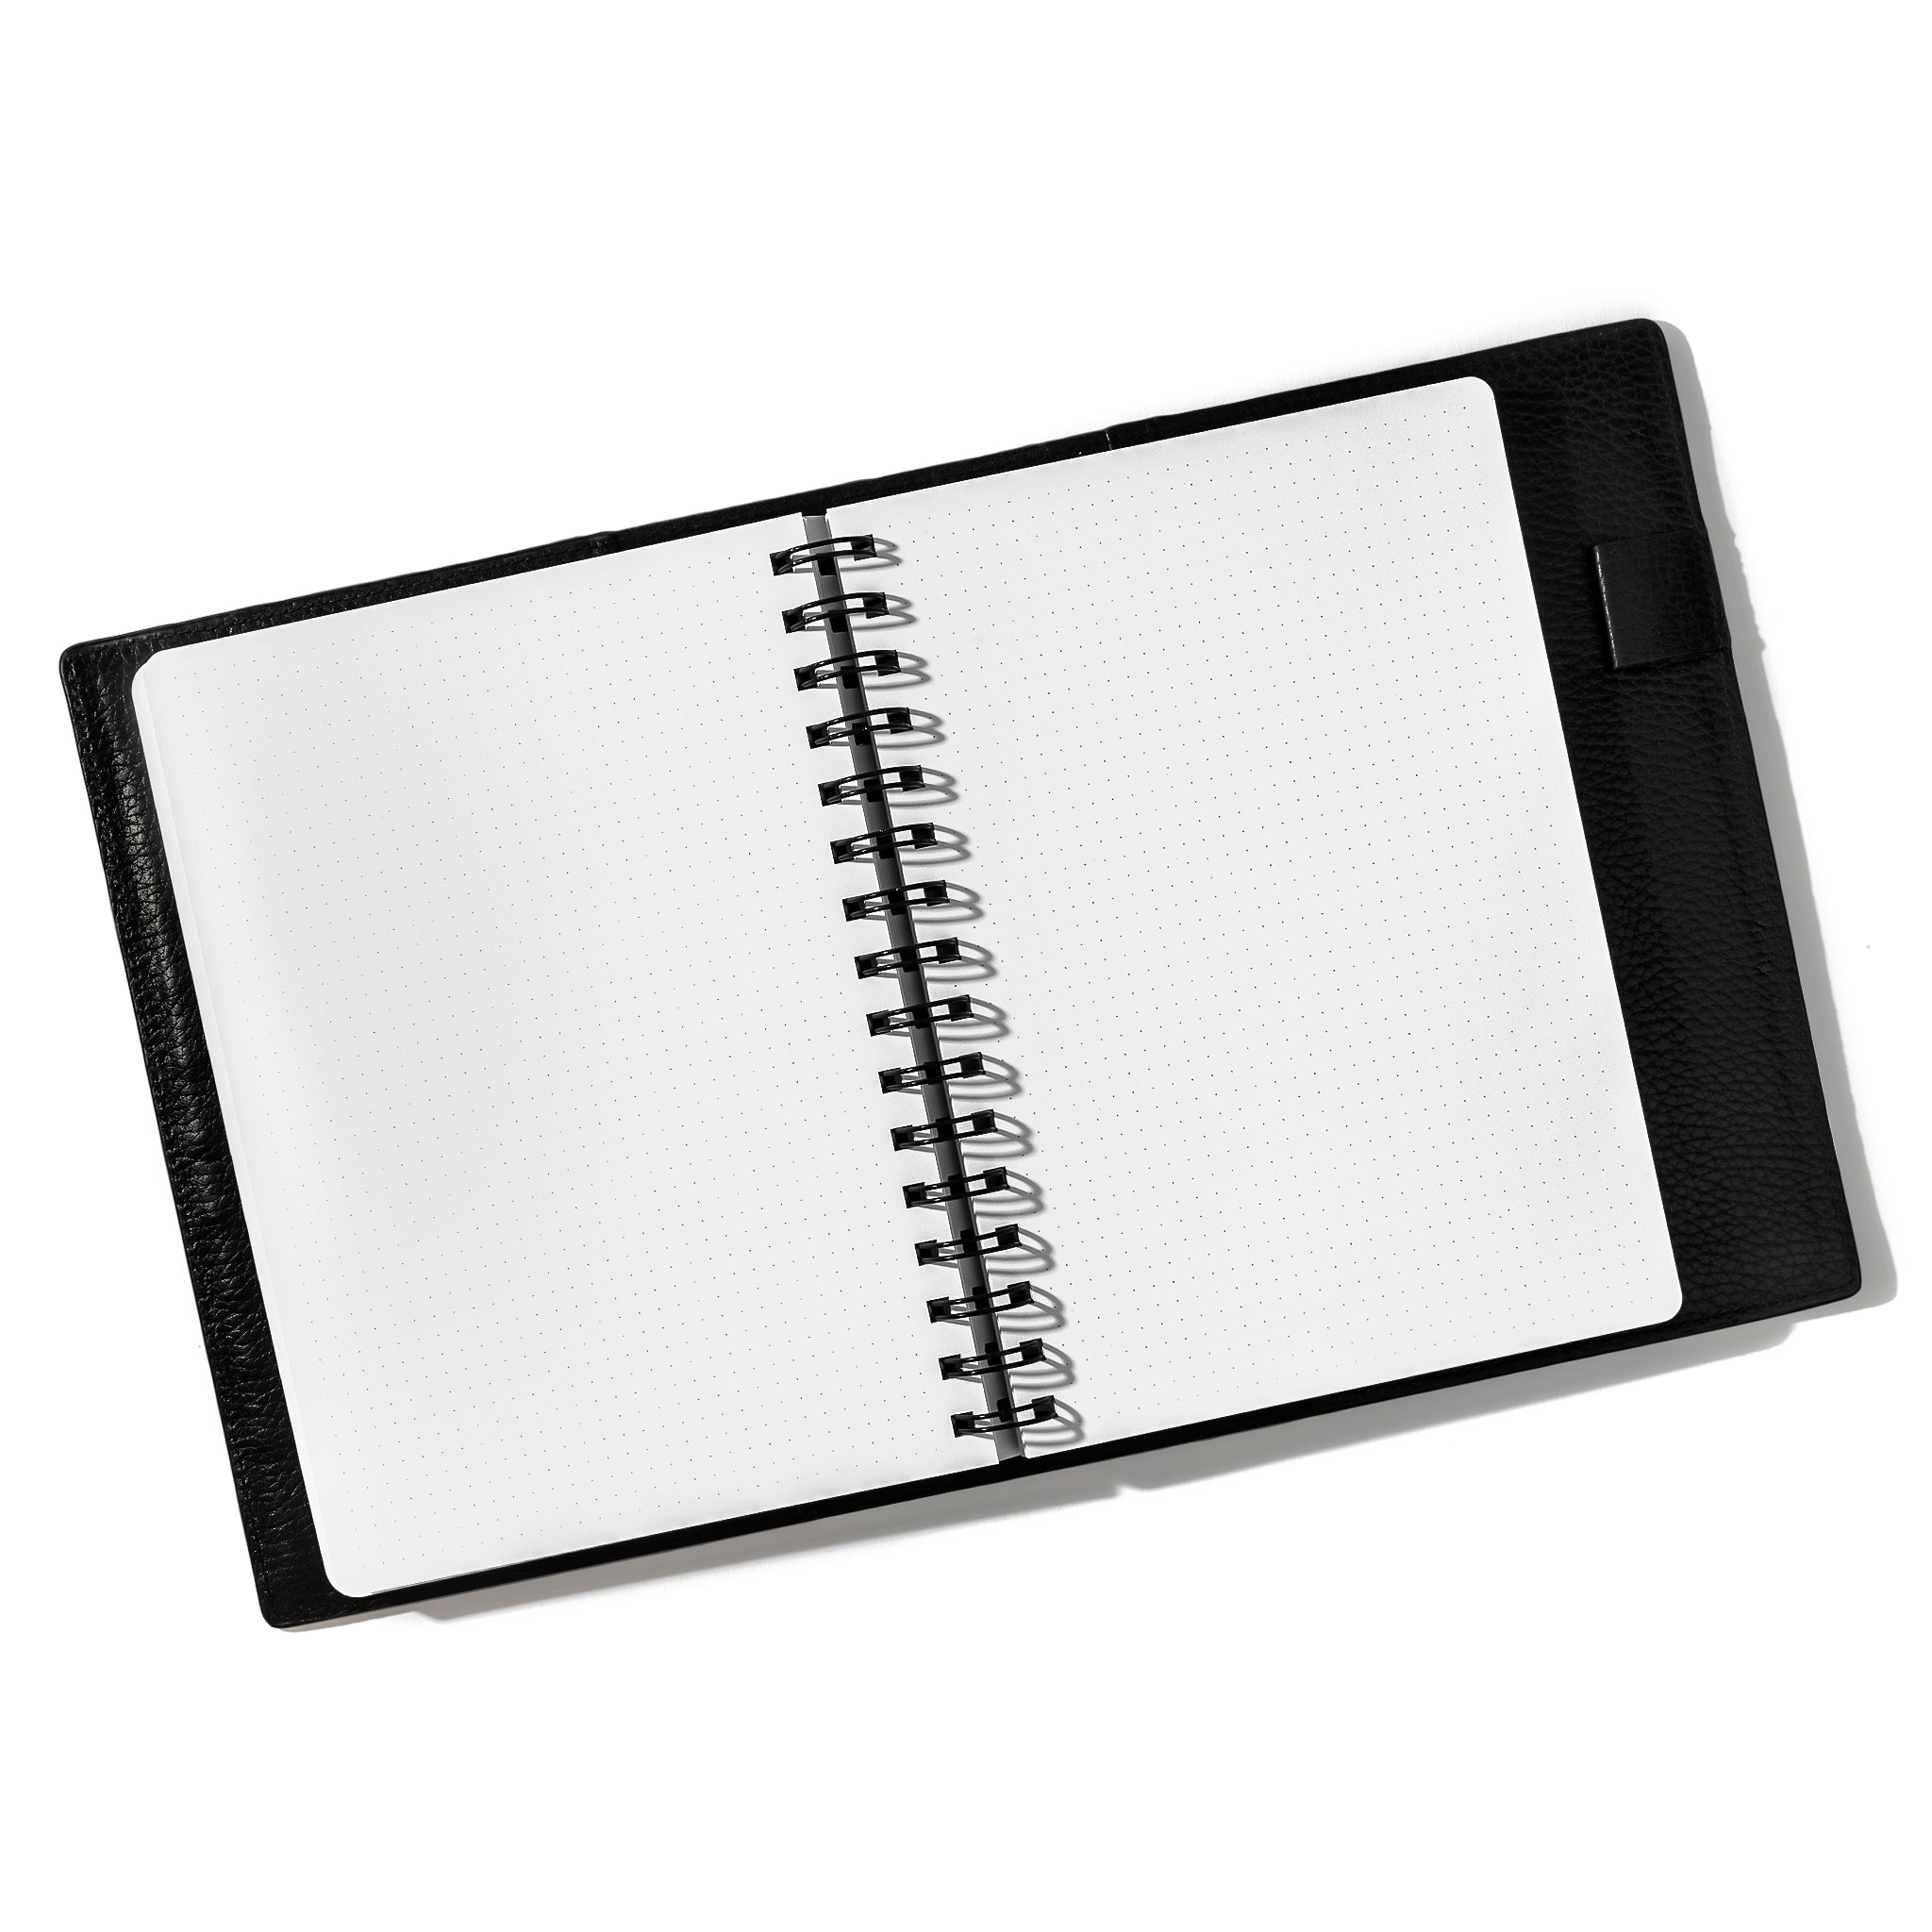 INNAXA A5 Spiral Notebook Blank Pages, White Cover, Golden Wiro